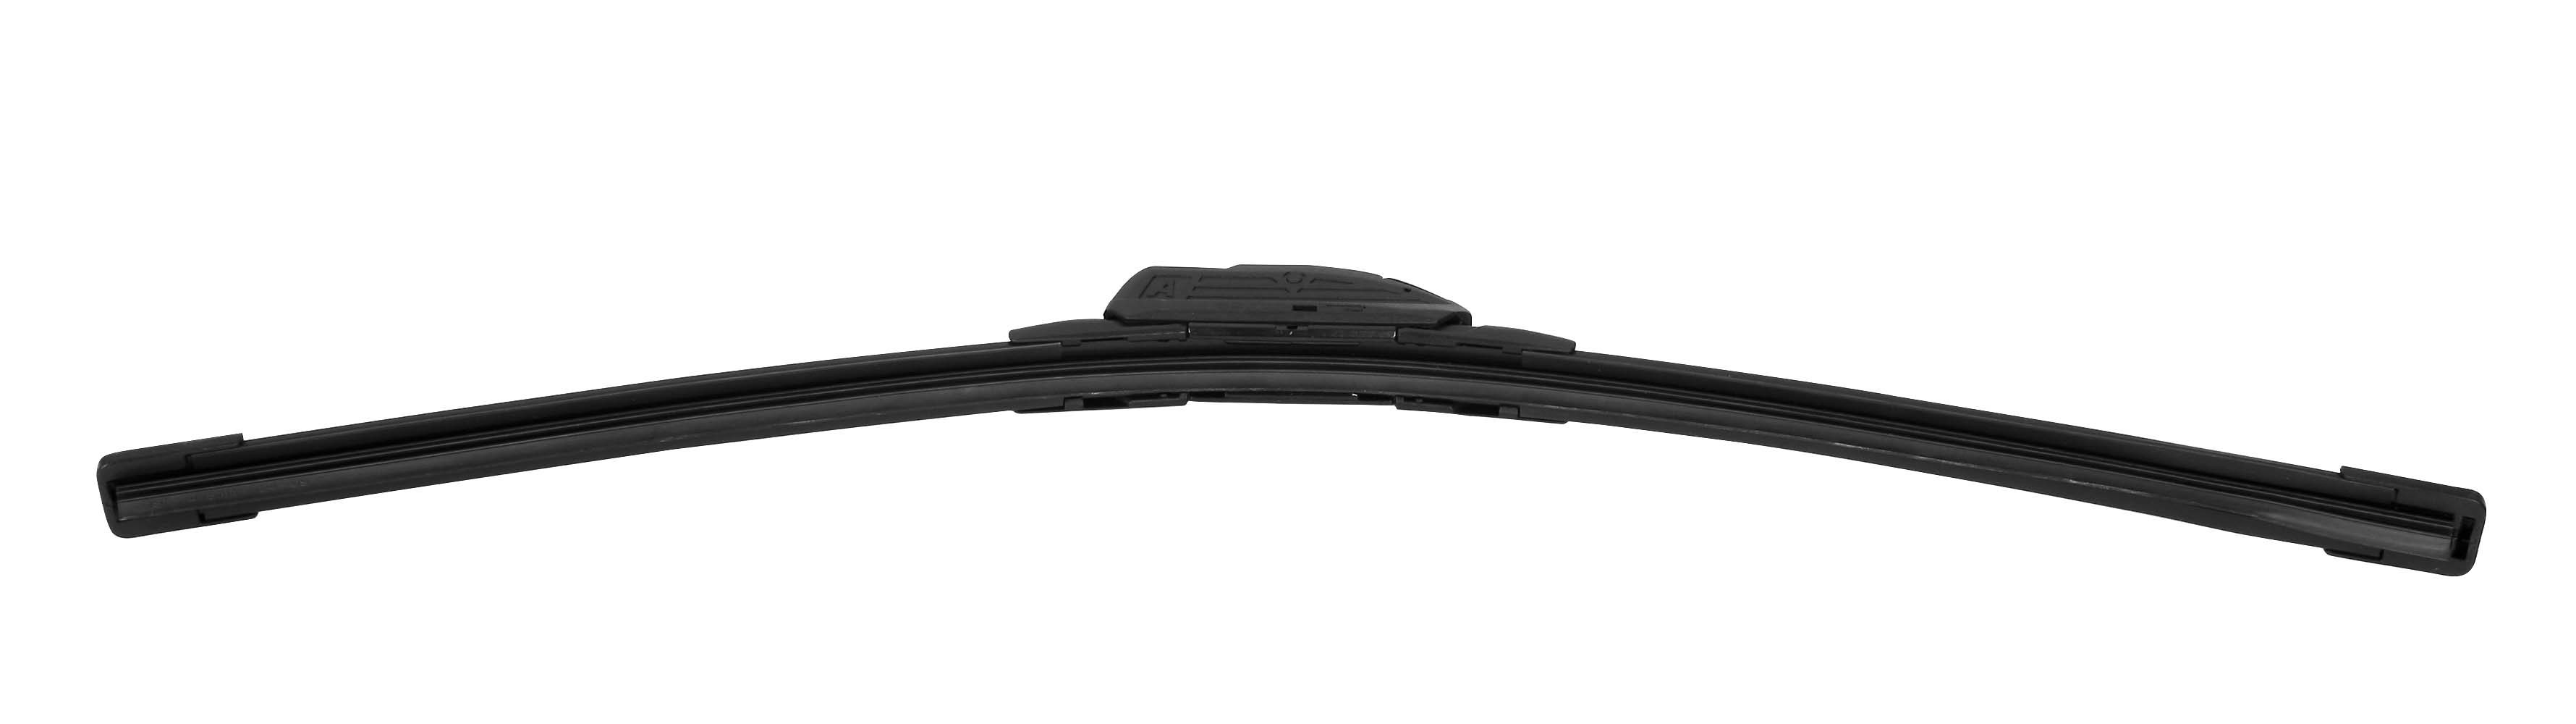 Filson wiper blade 8 adaptors 51 cm (20“) - 1 pcs thumb